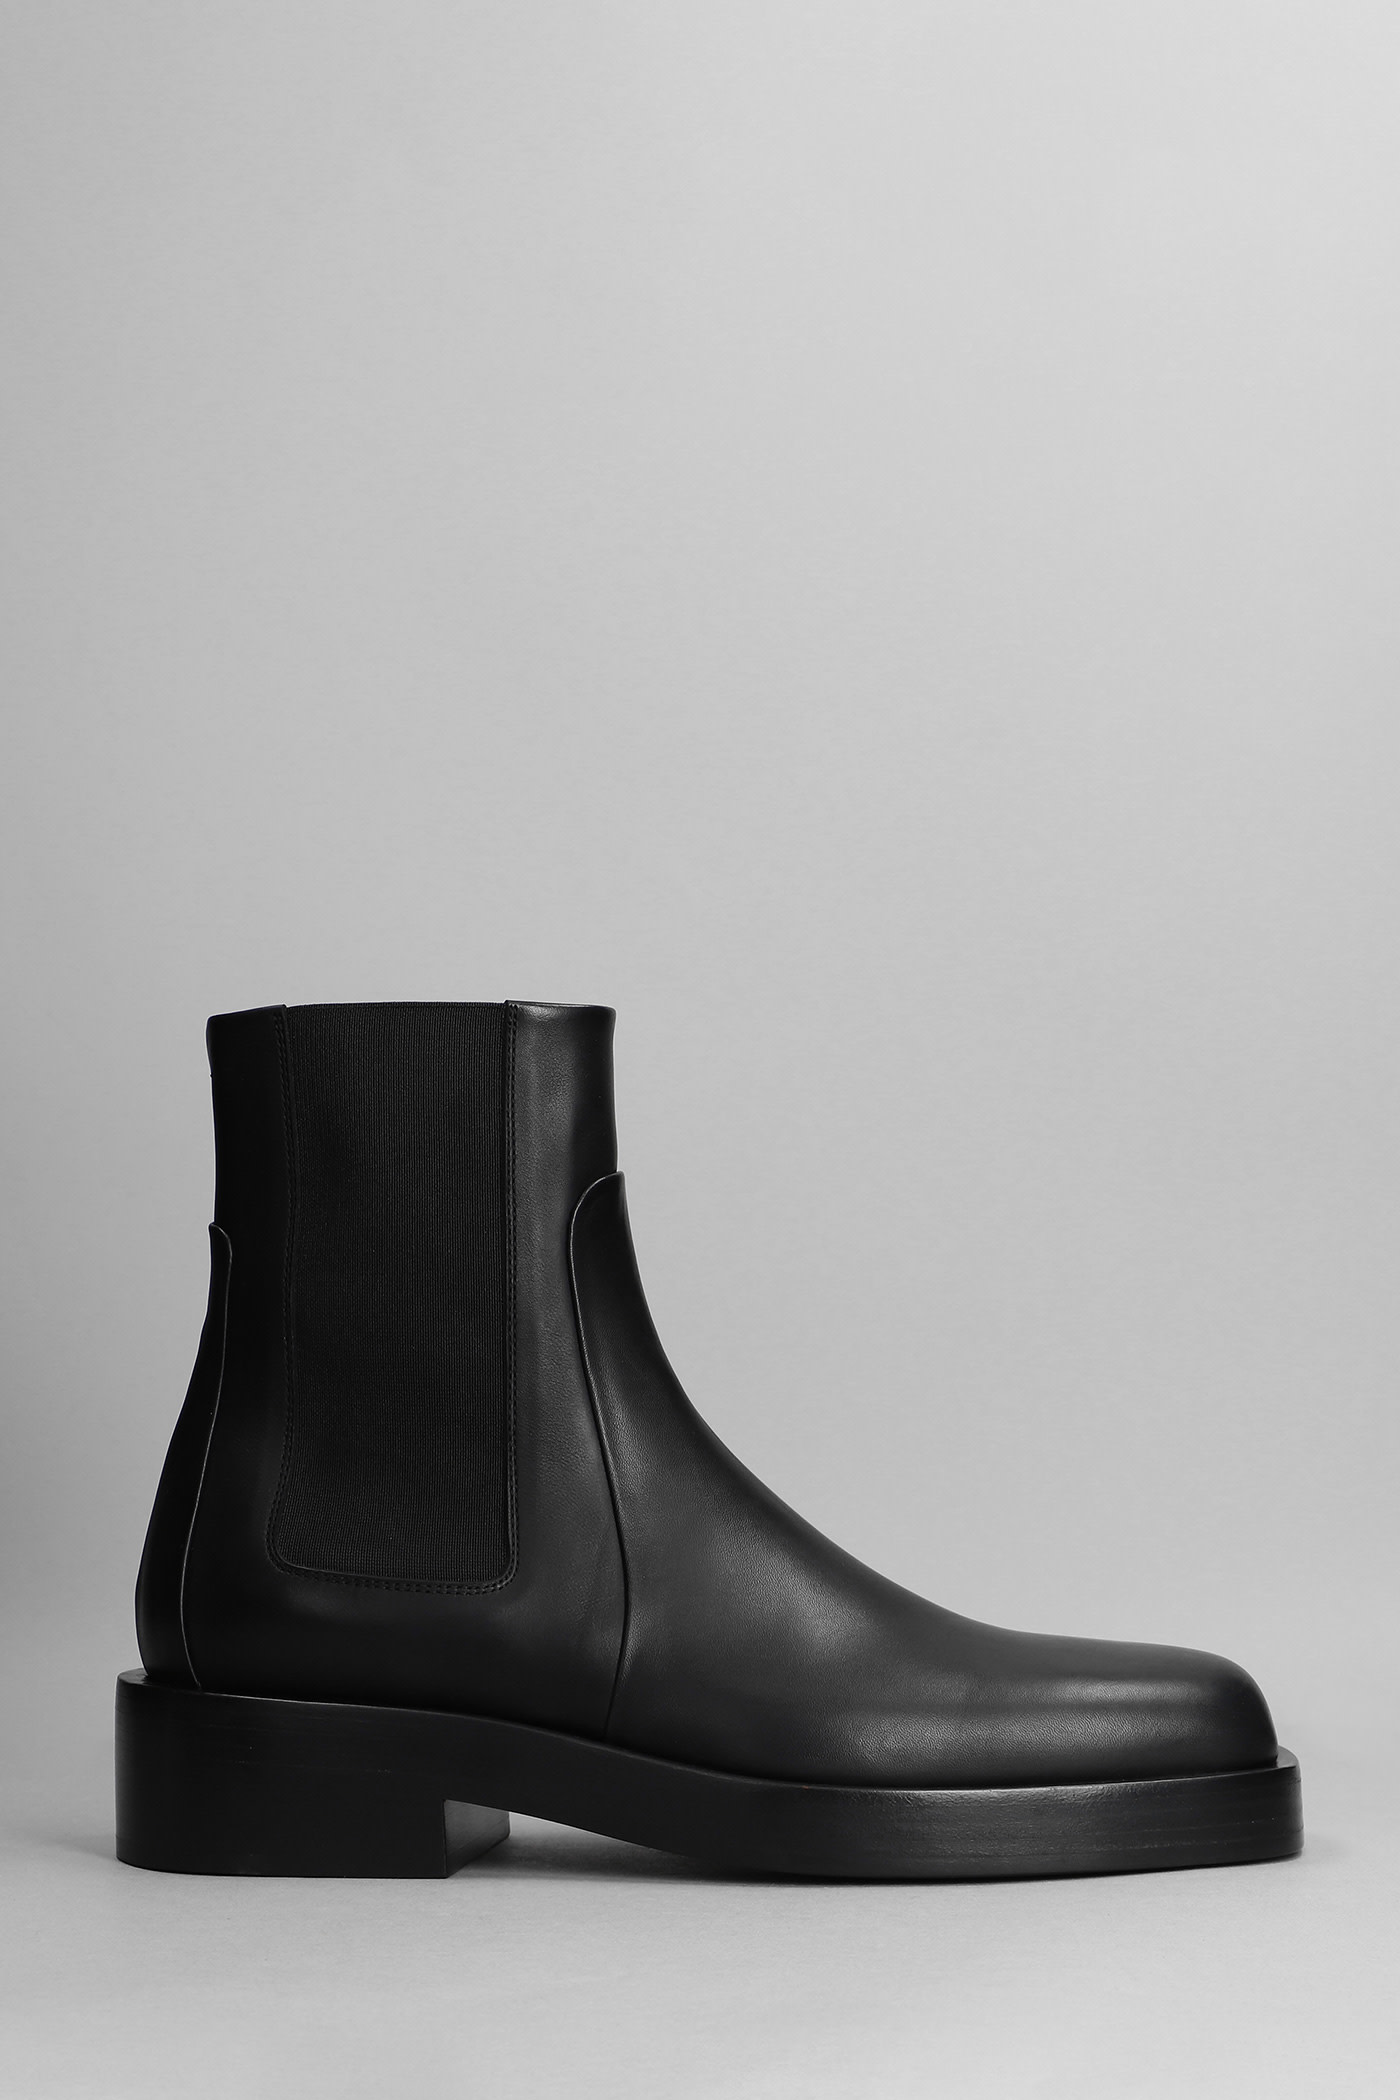 Jil Sander Ankle Boots In Black Leather